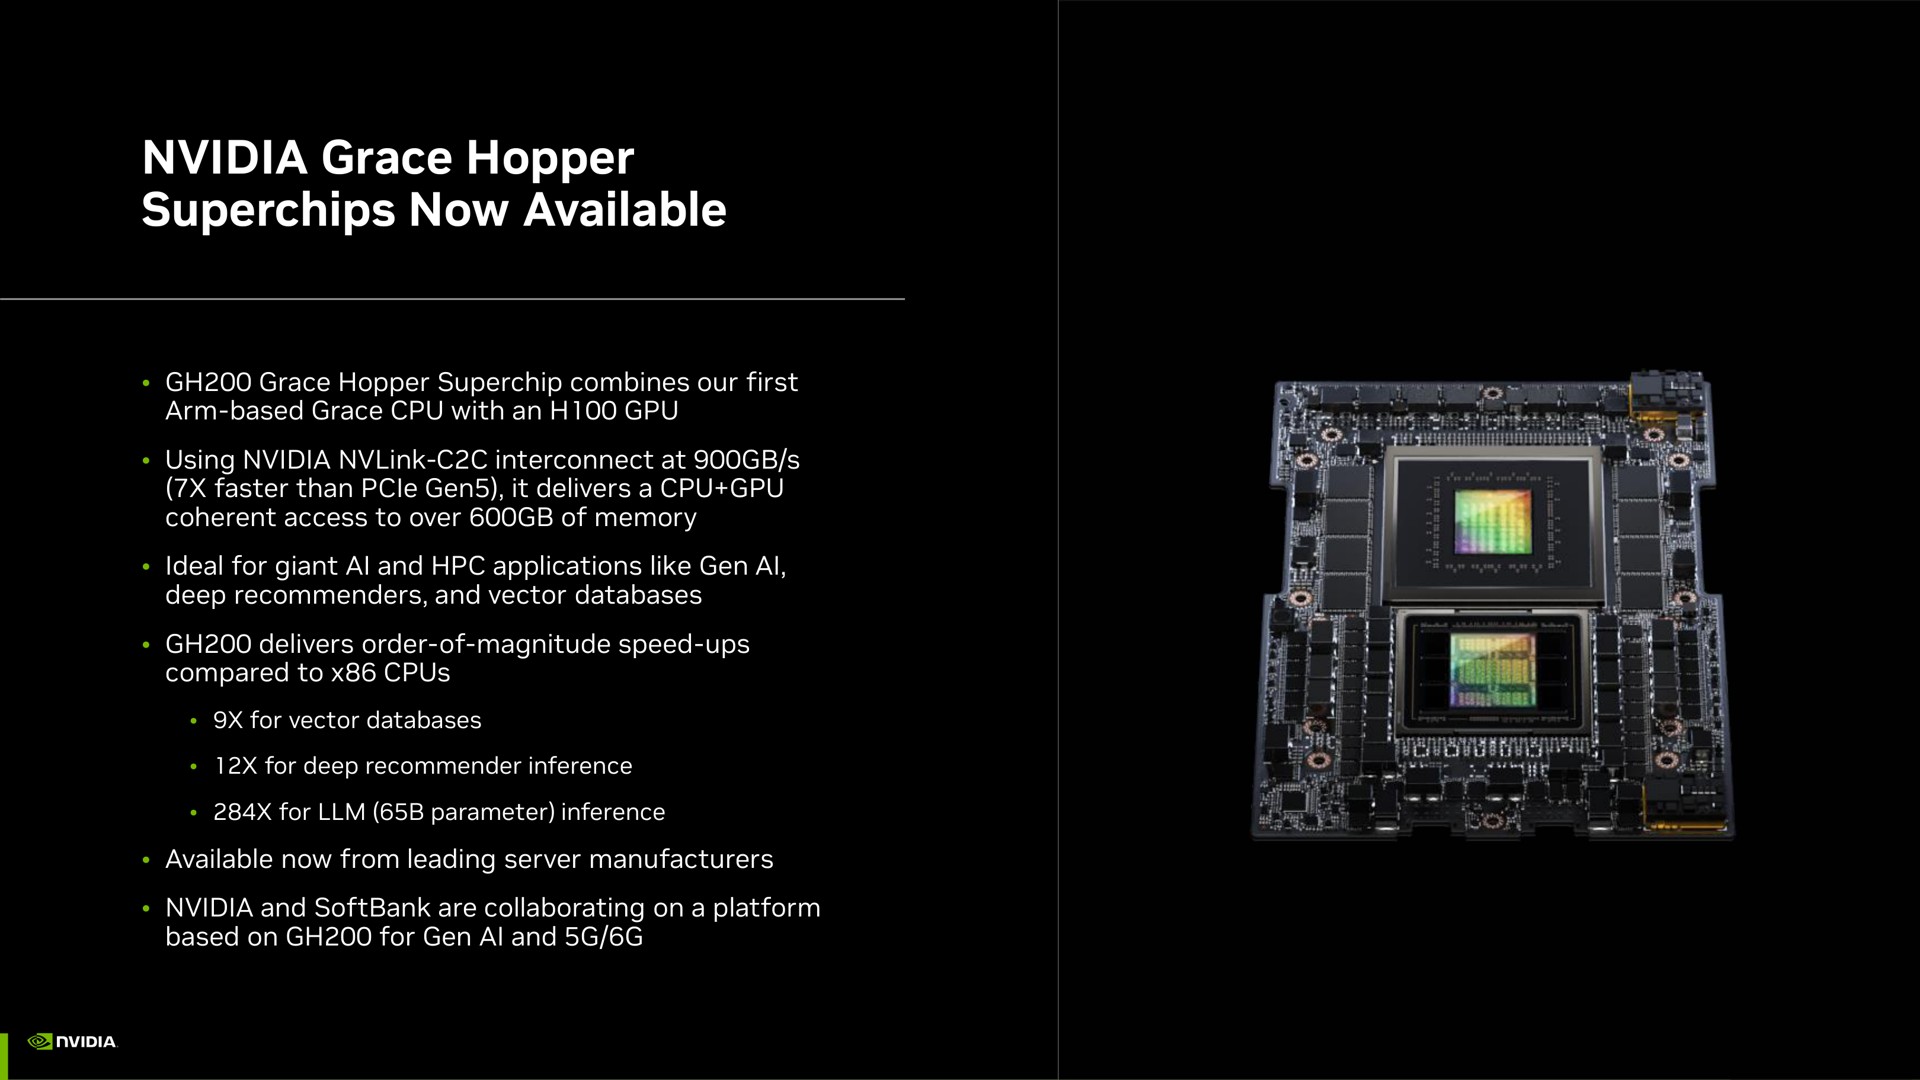 grace hopper now available | NVIDIA